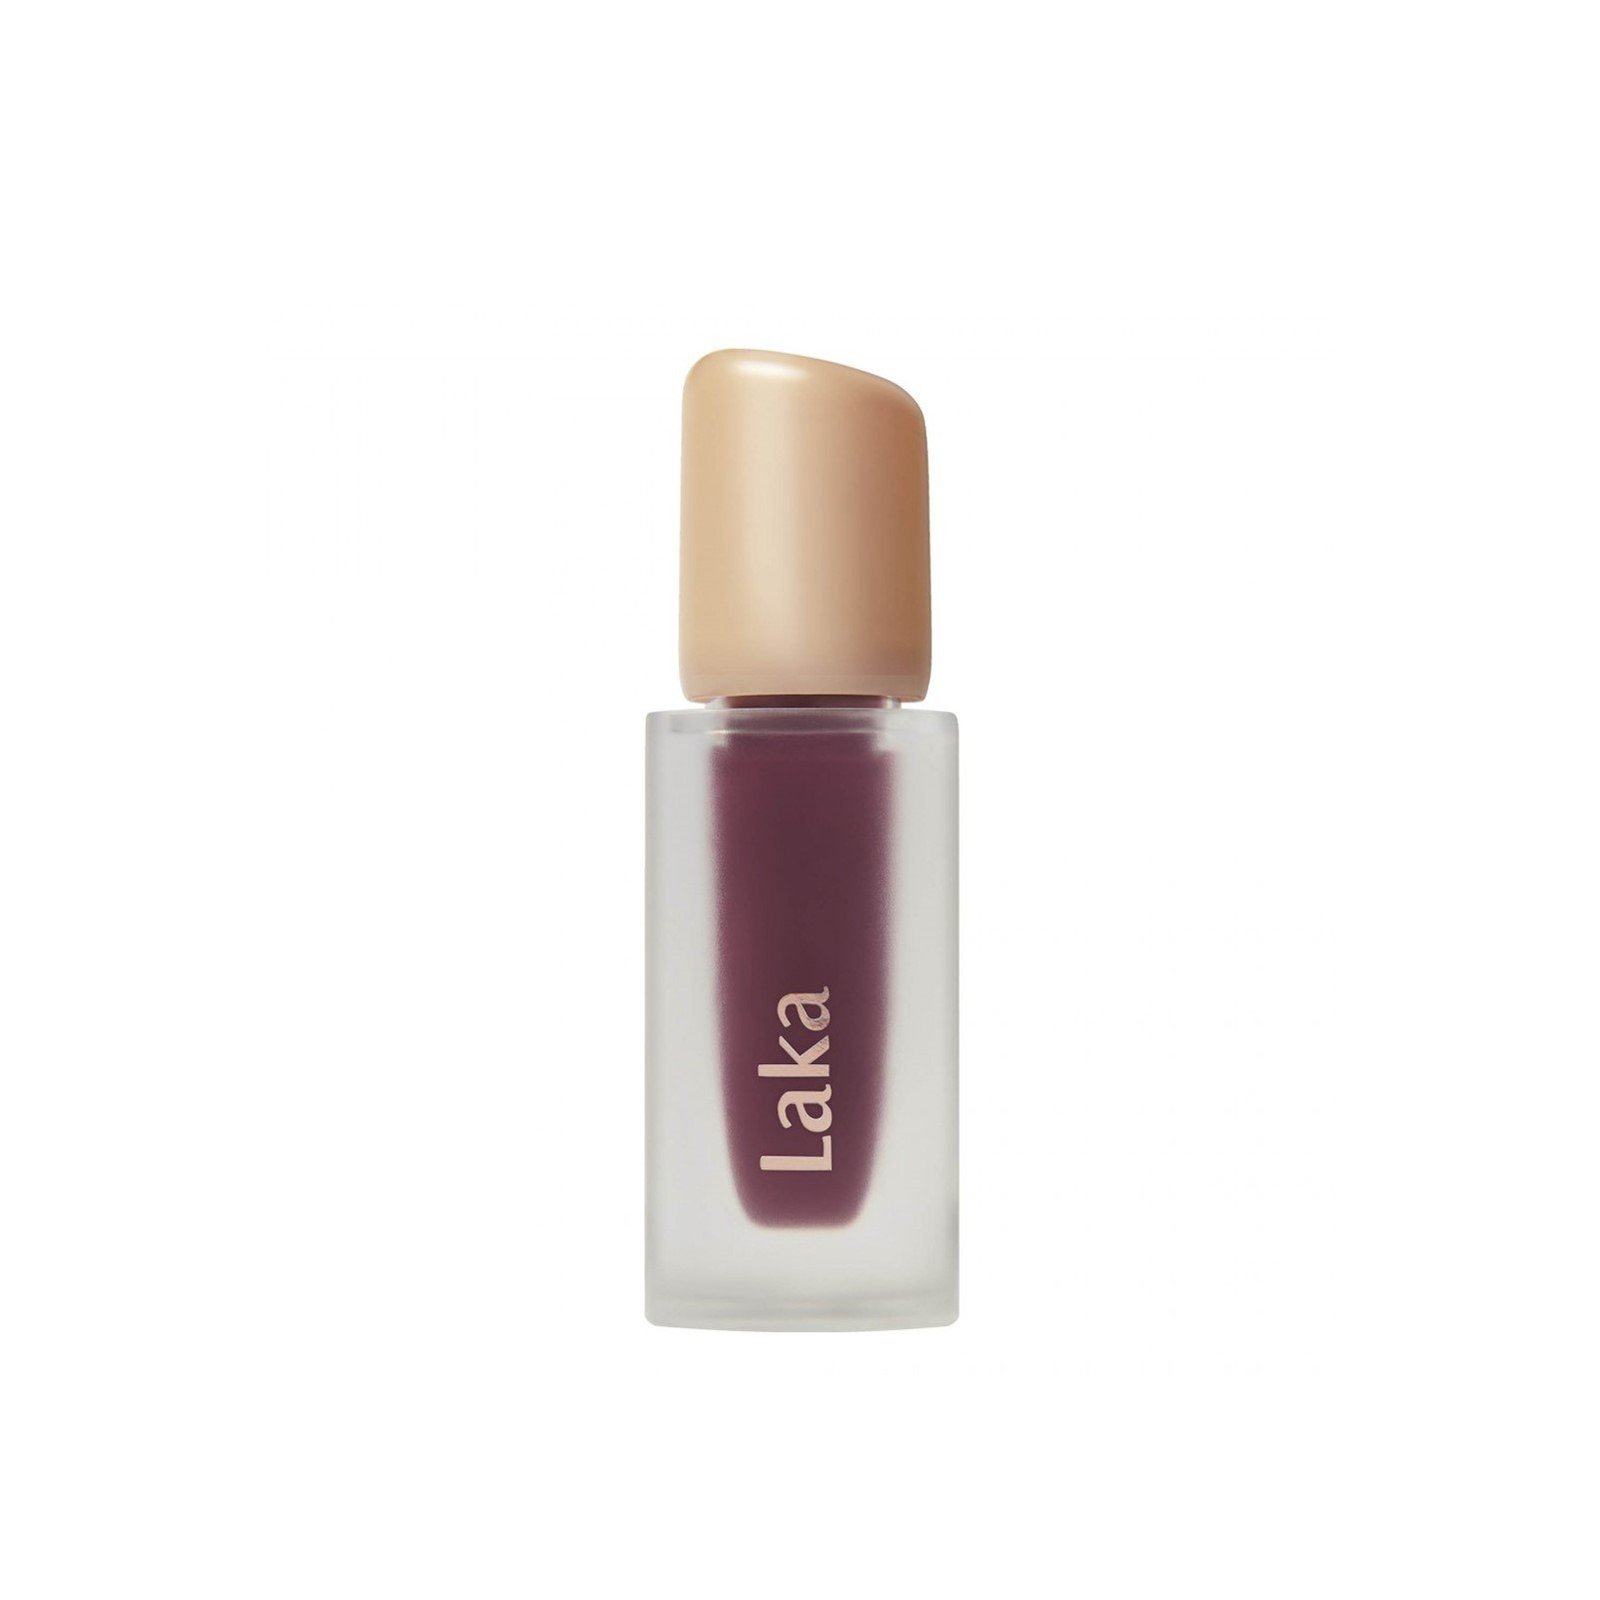 Laka Fruity Glam Lip Tint 115 Envy 4.5g (0.15 oz)